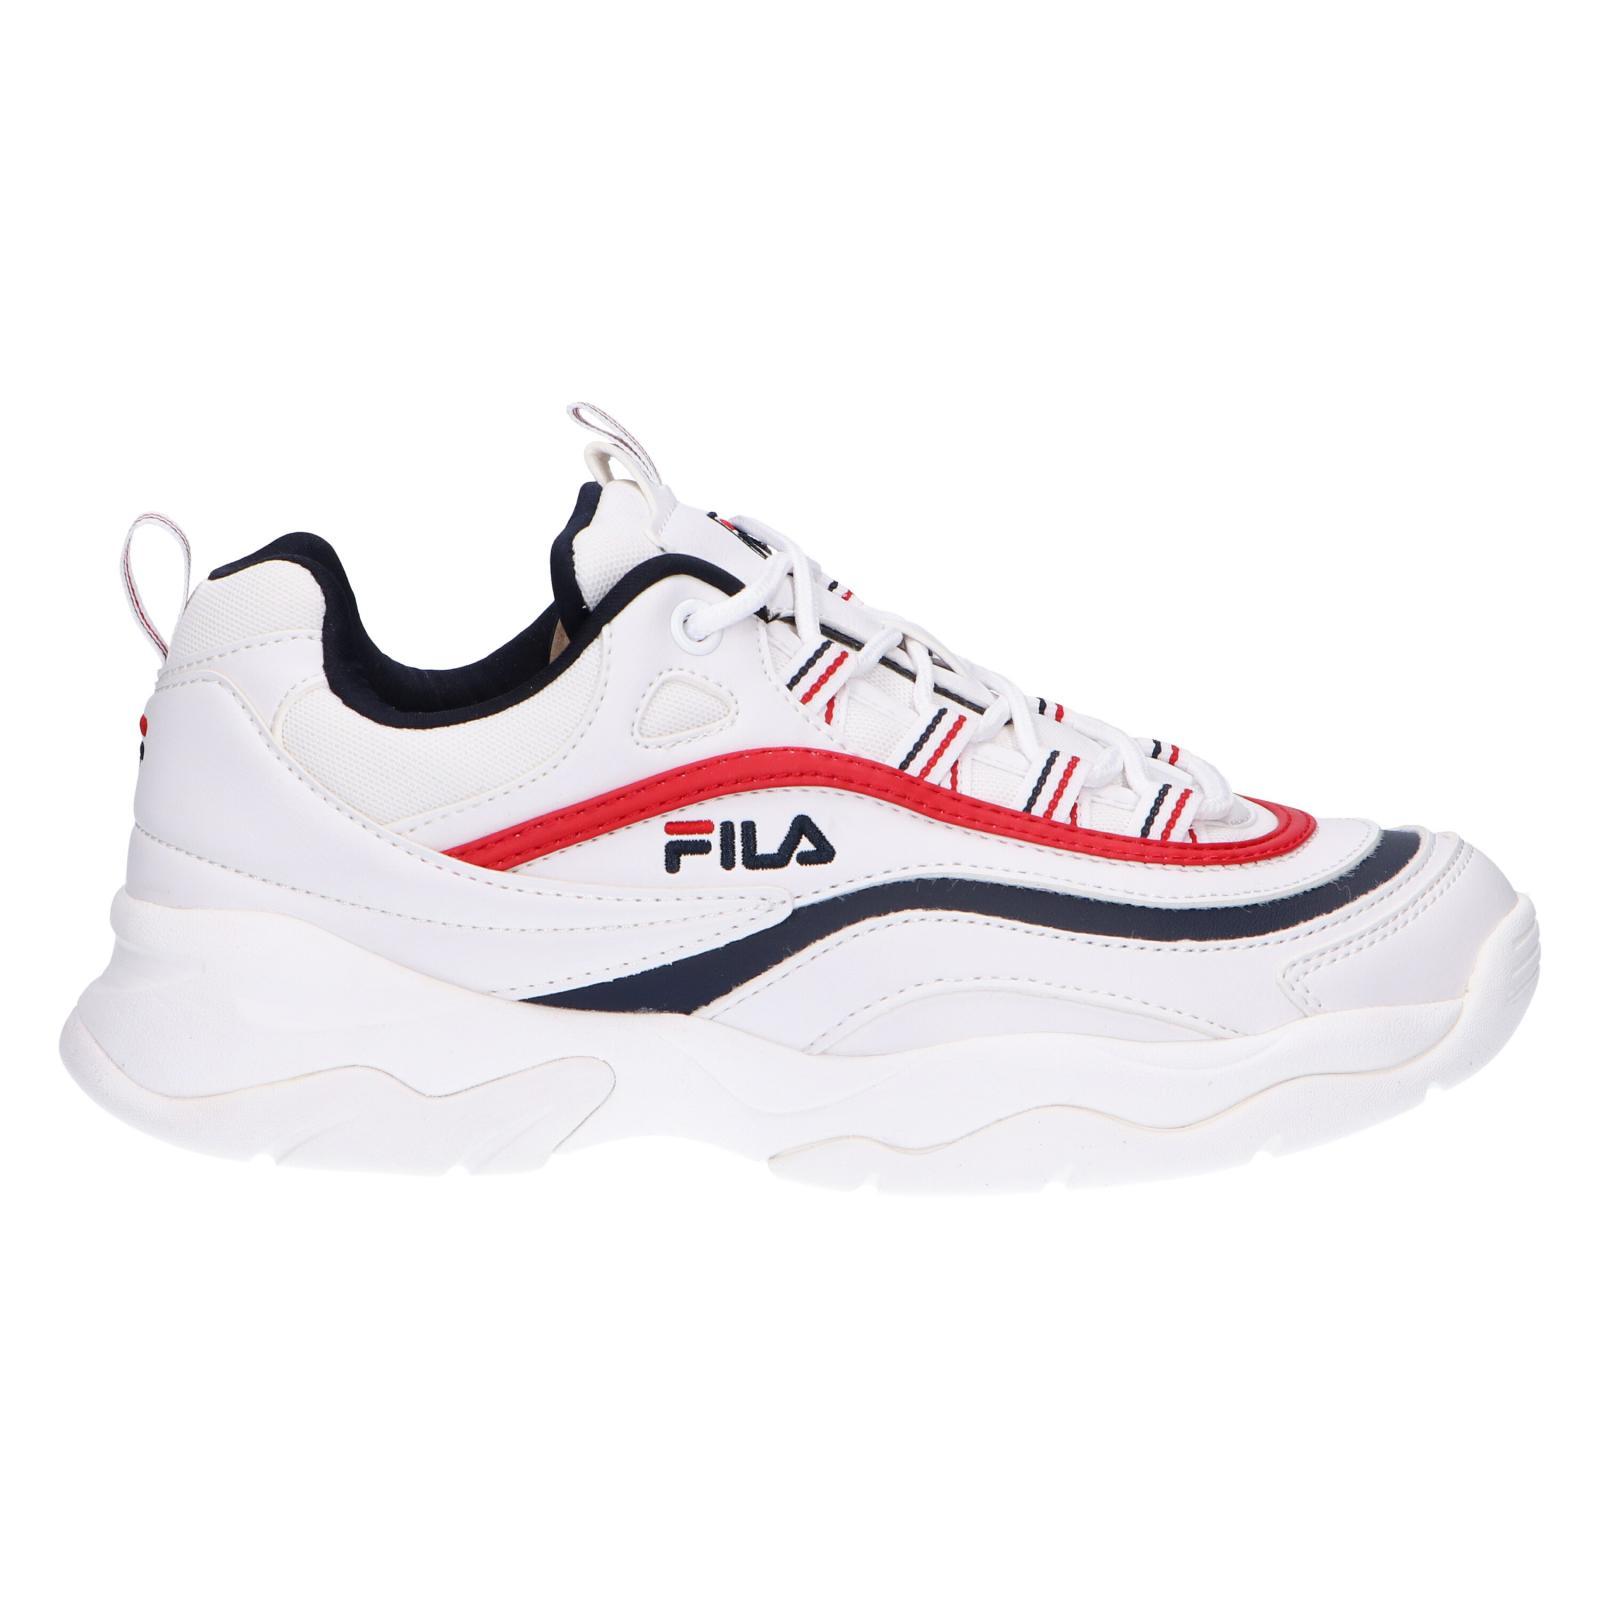 Sports shoes woman FILA 1010562 150 RAY WHITE NAVY multibella